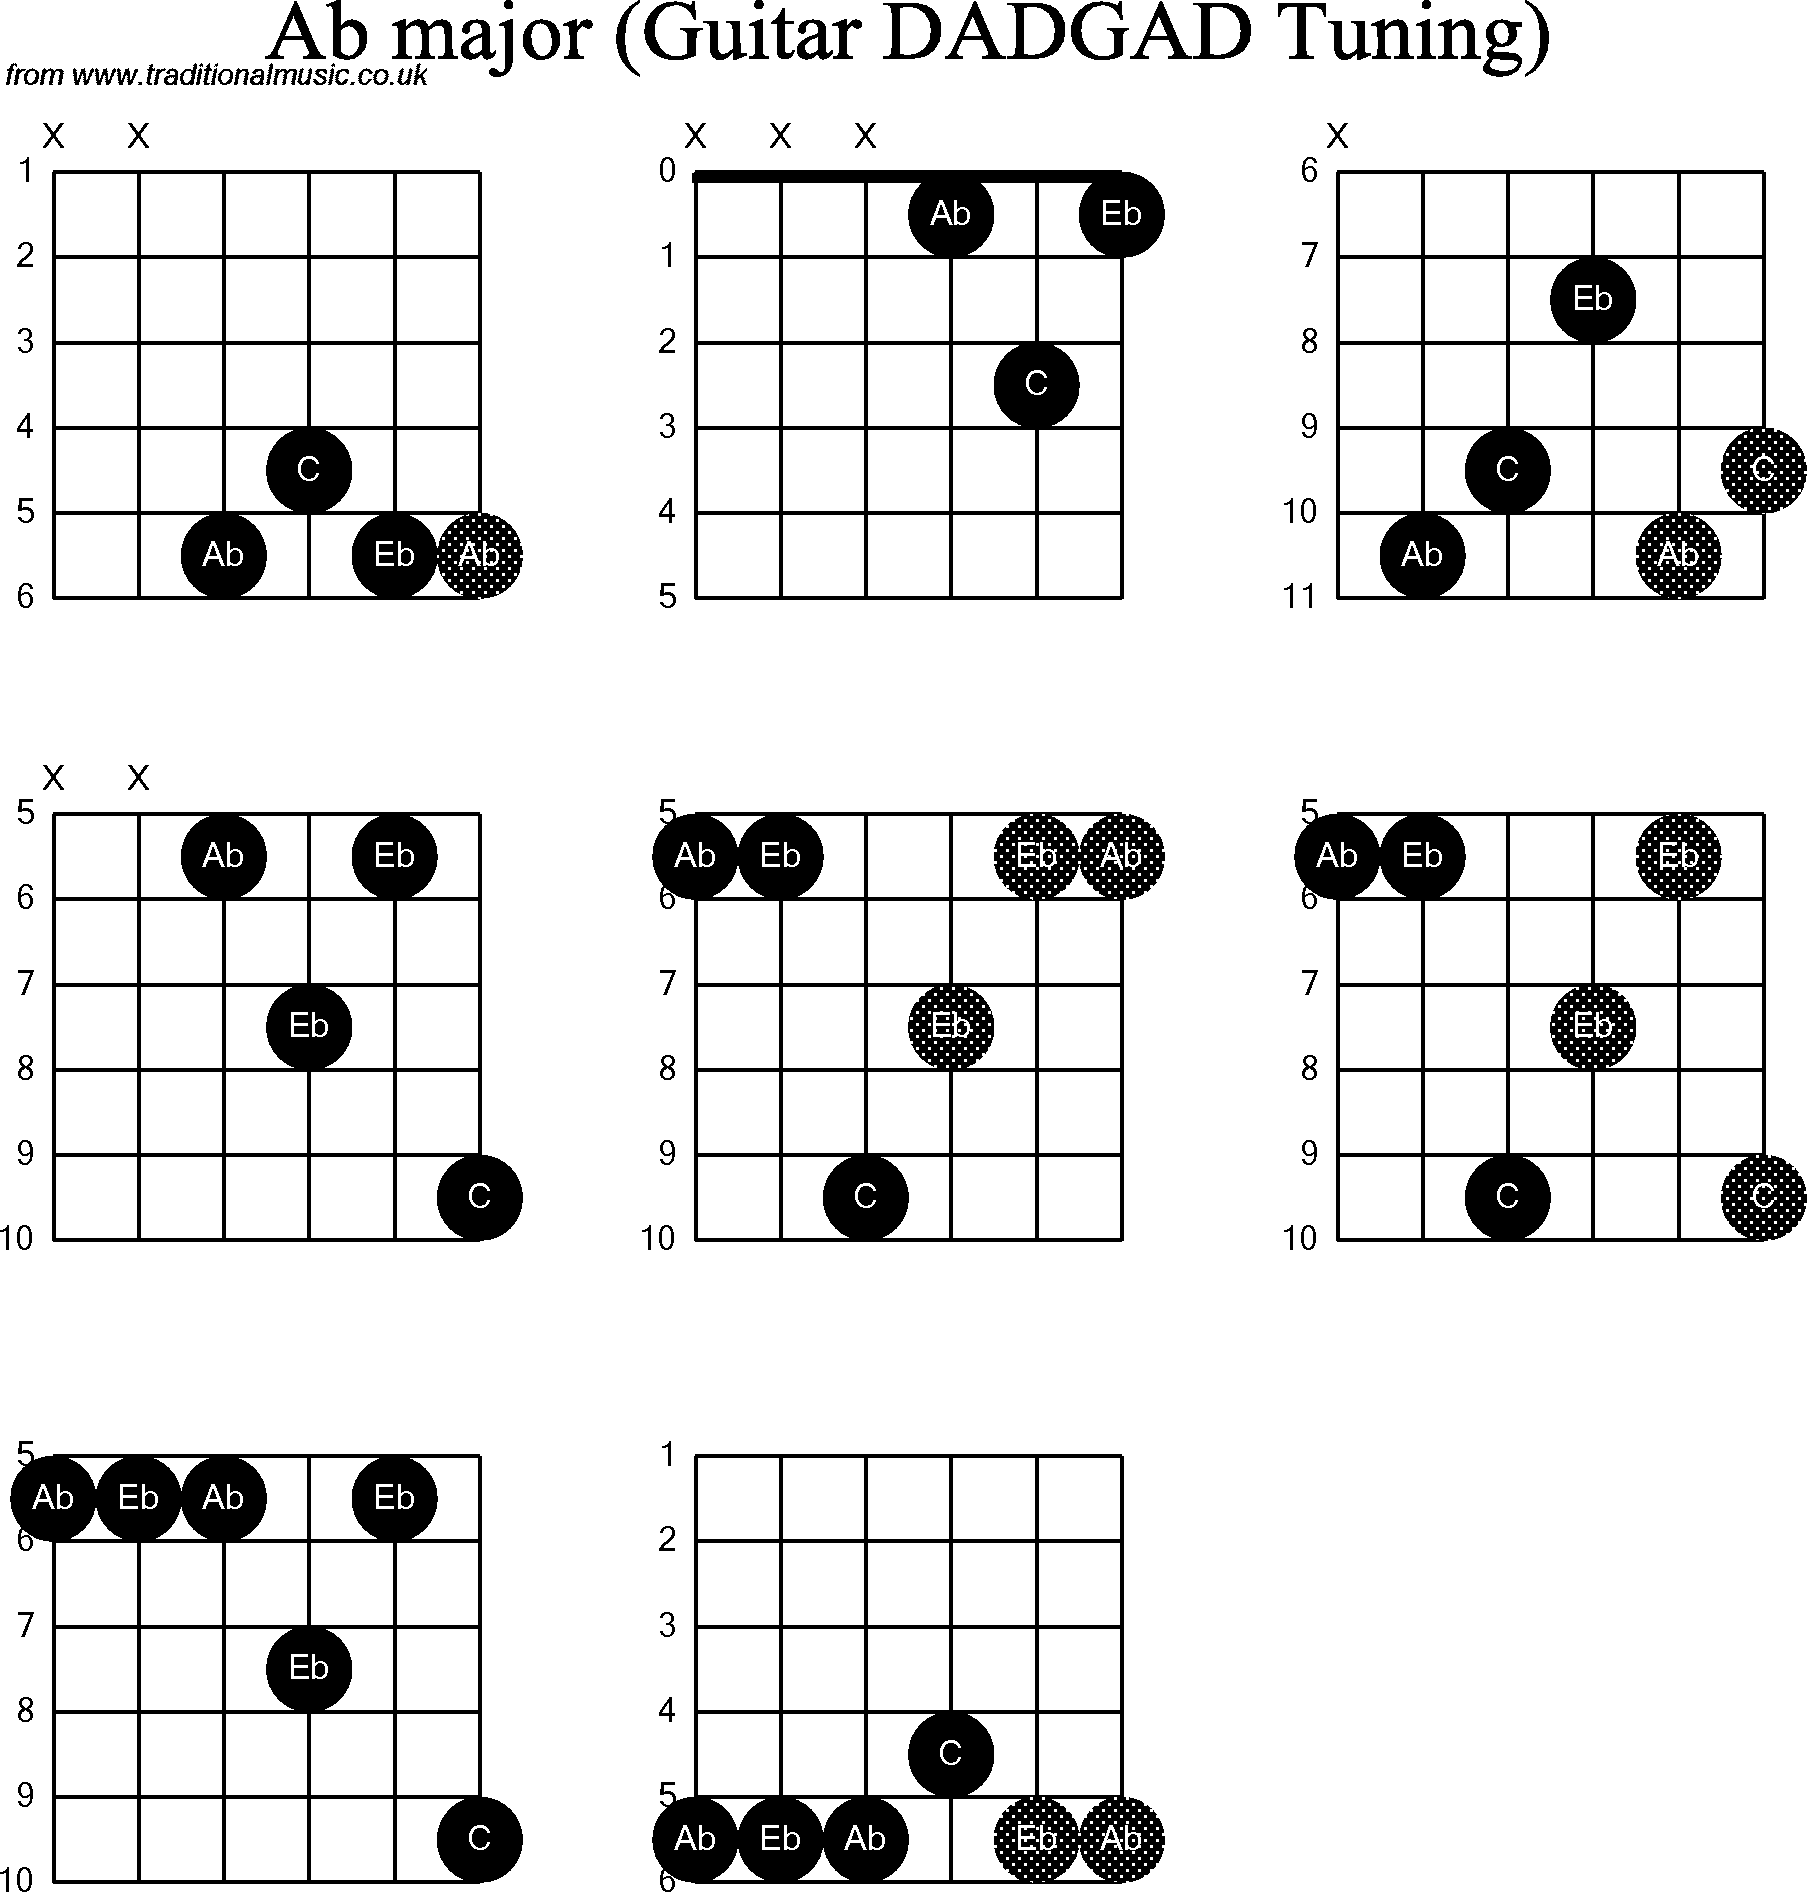 Chord Diagrams for D Modal Guitar(DADGAD), Ab